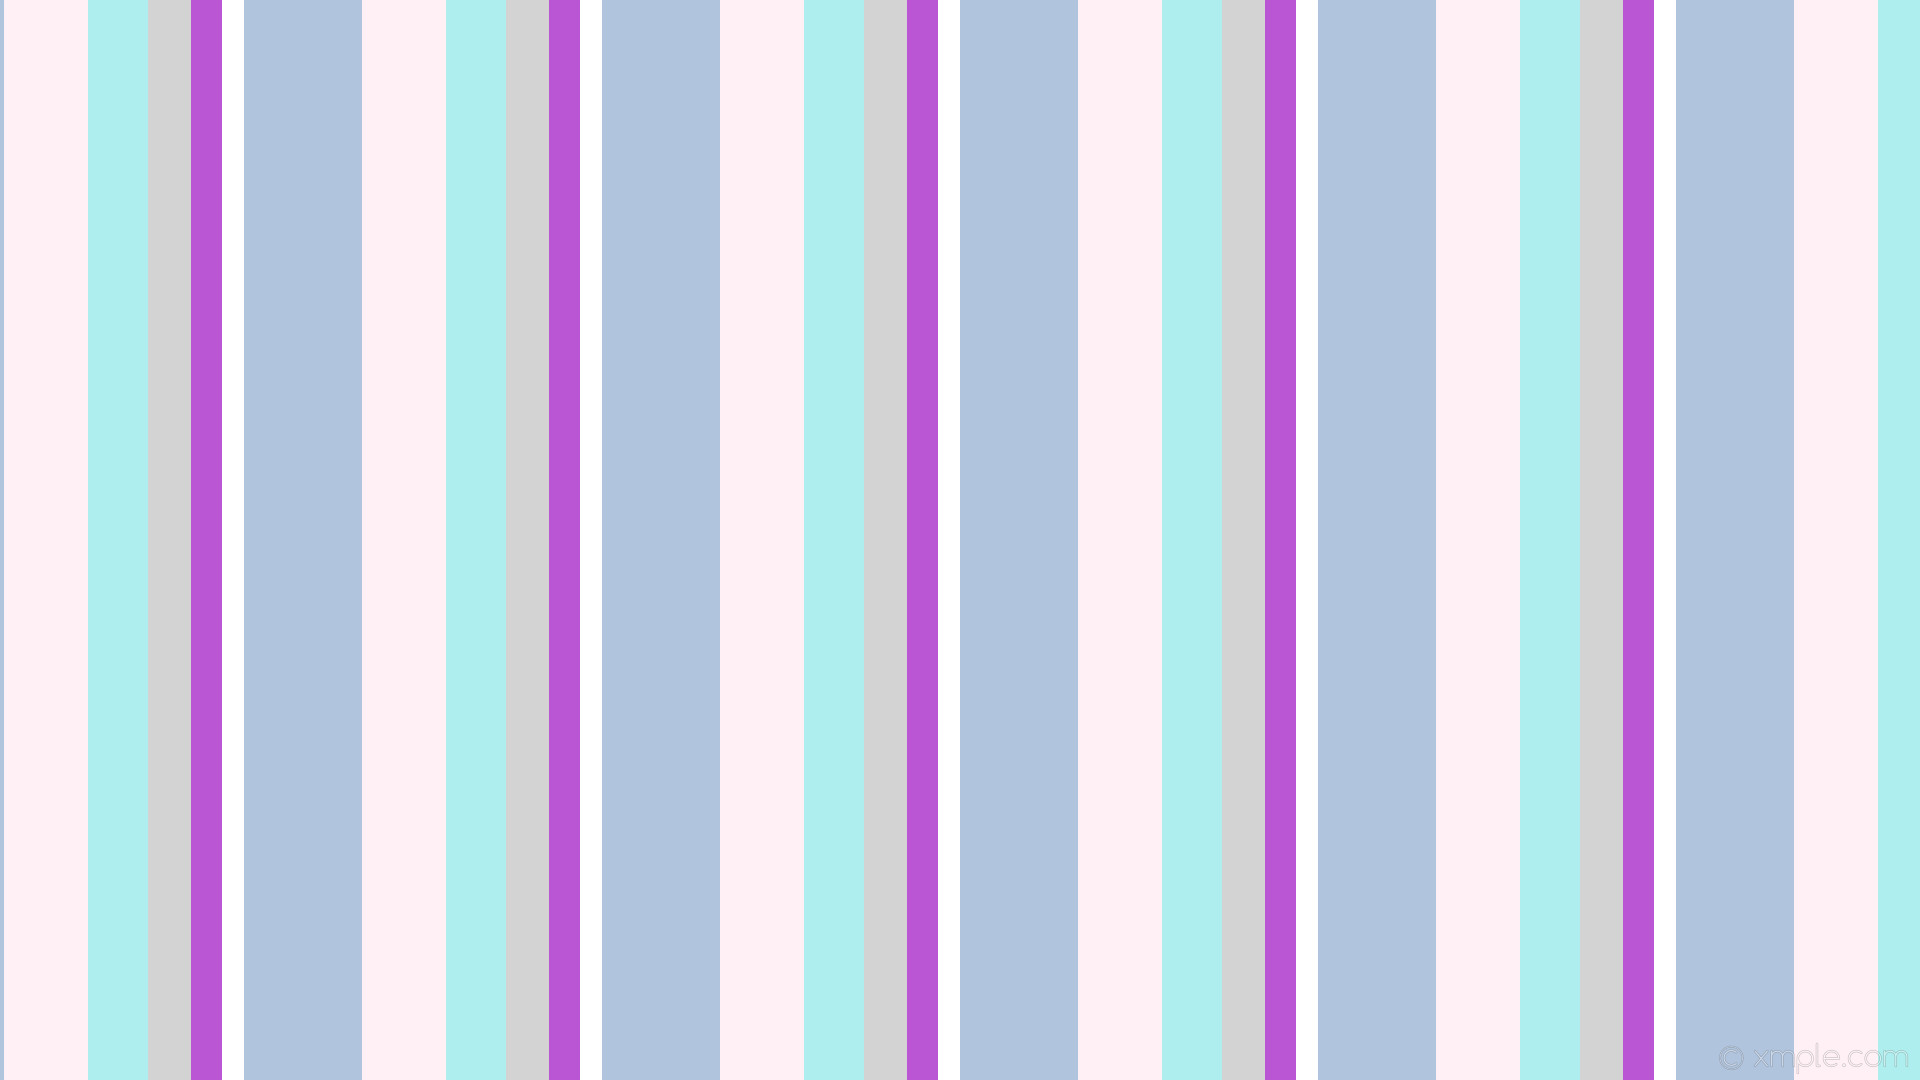 1920x1080 wallpaper purple white grey streaks blue lines stripes medium orchid light  gray pale turquoise lavender blush